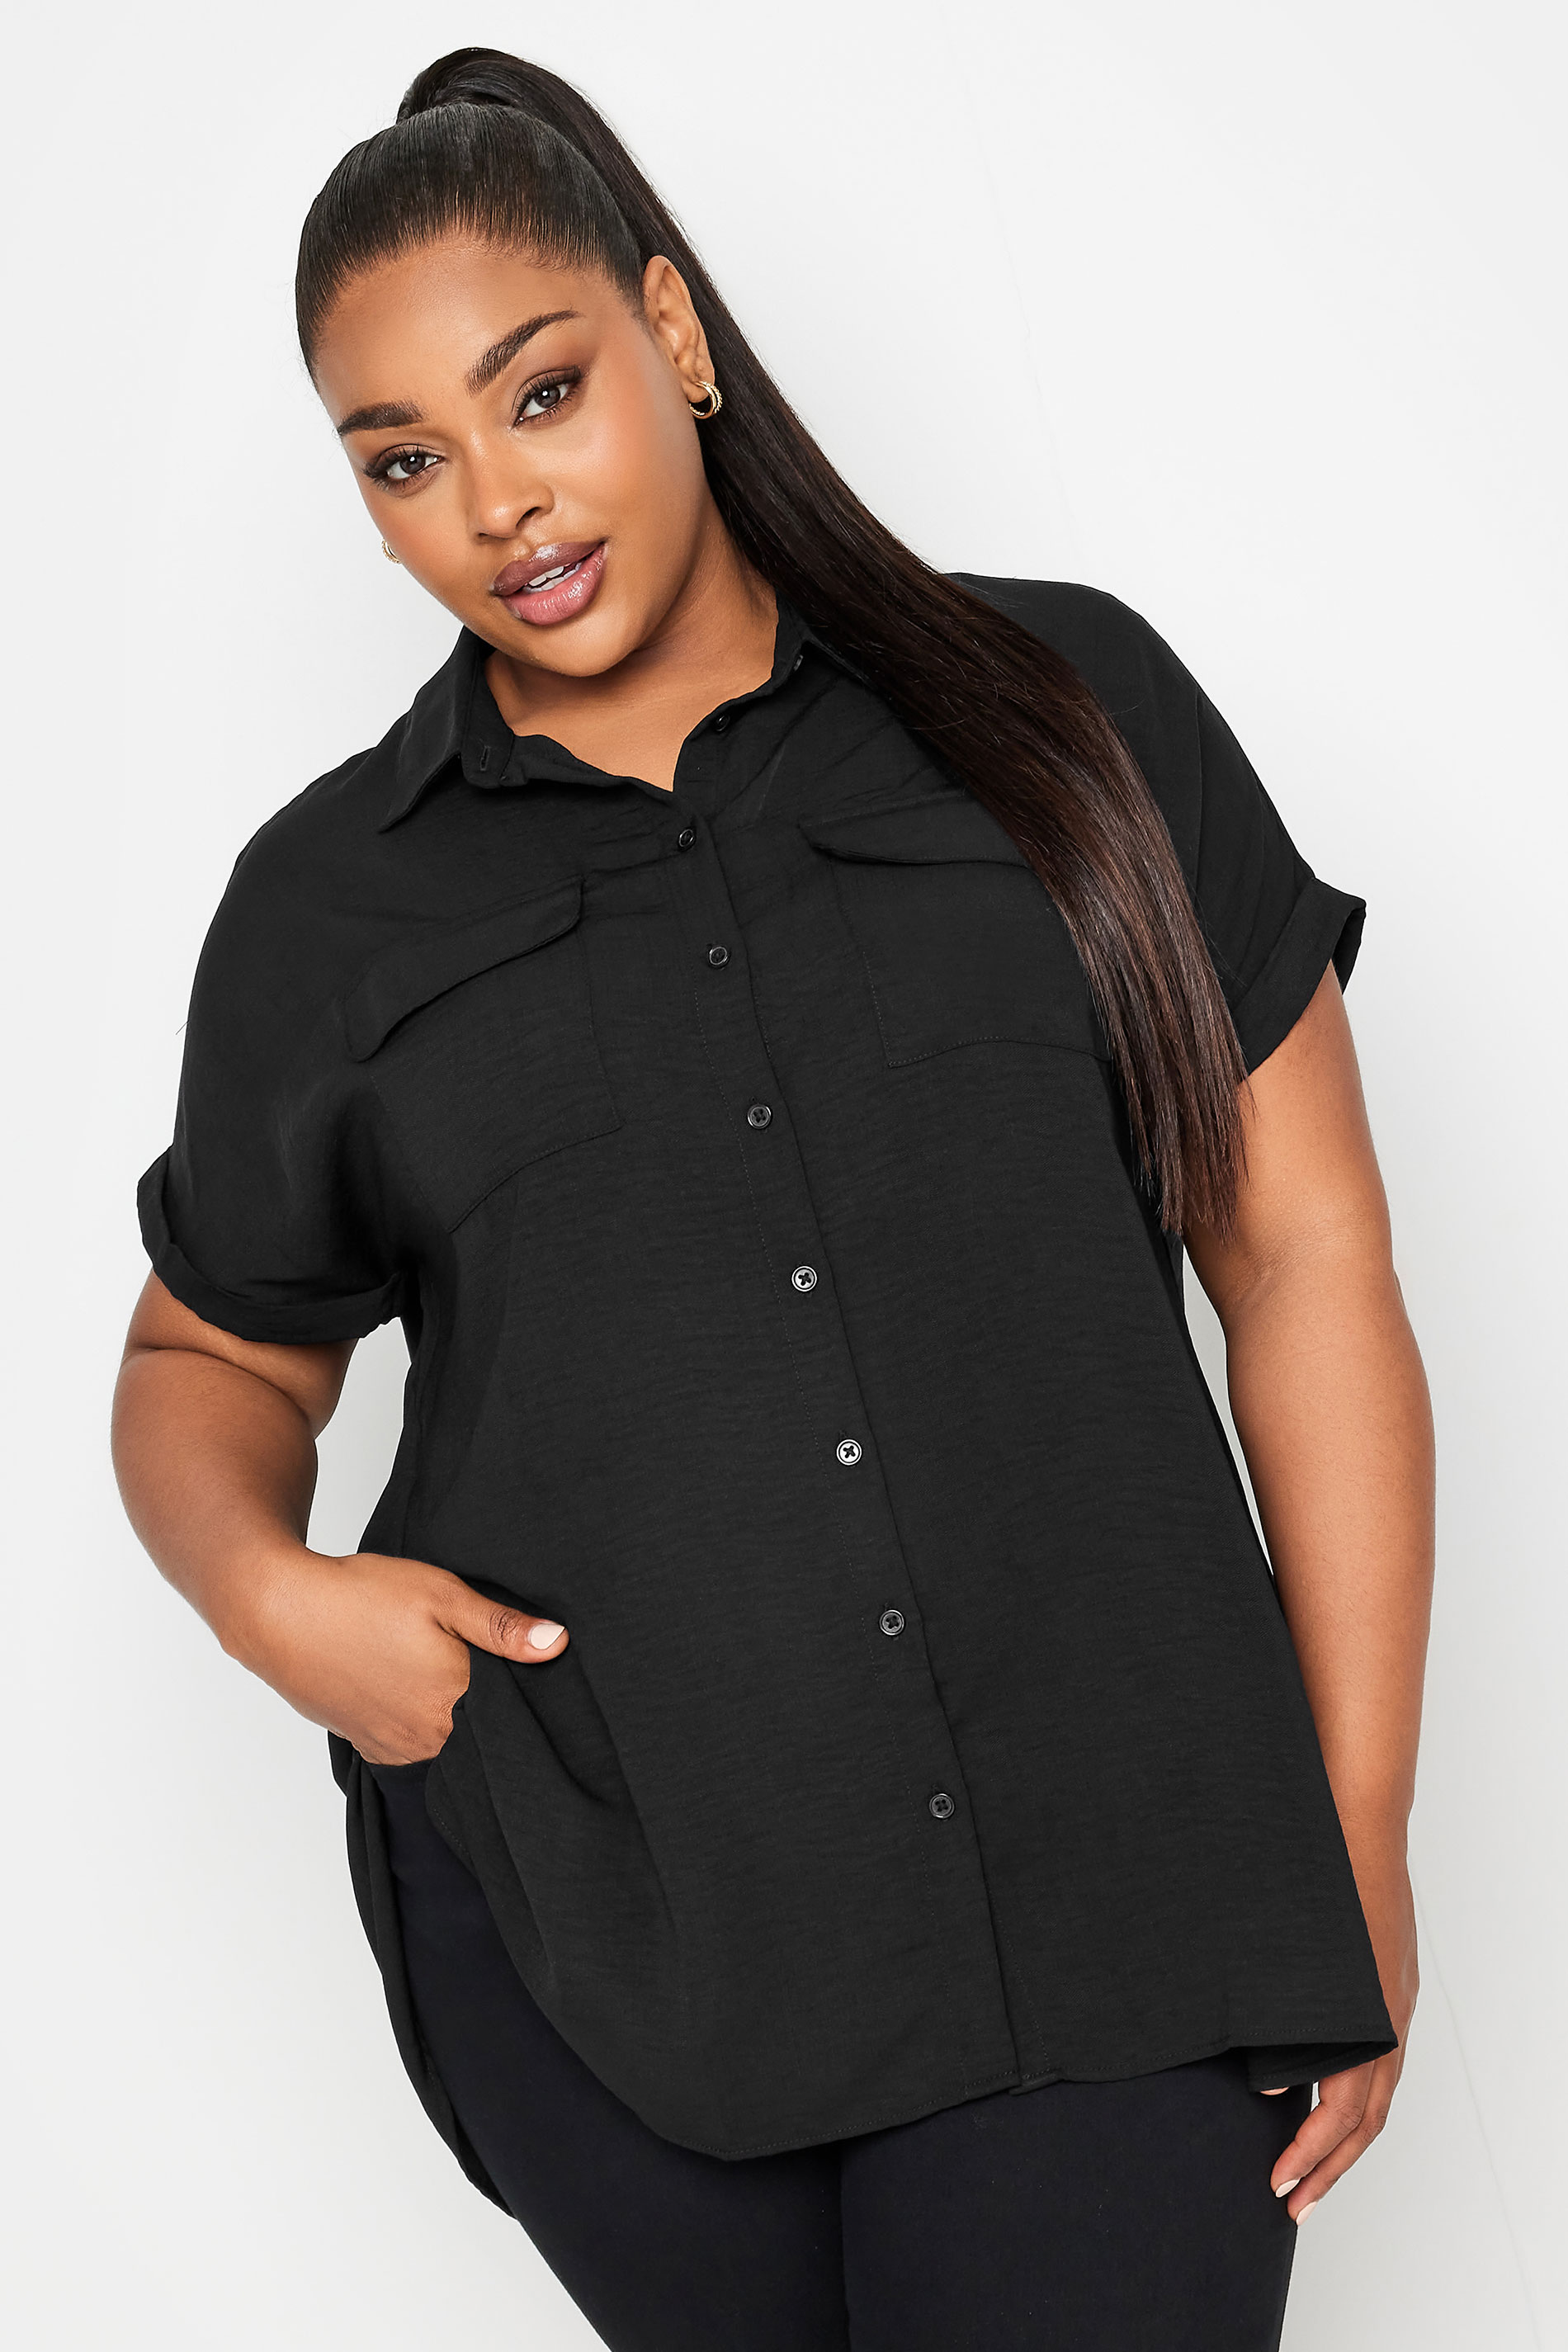 YOURS Curve Plus Size Black Utility Short Sleeve Shirt | Yours Clothing  1